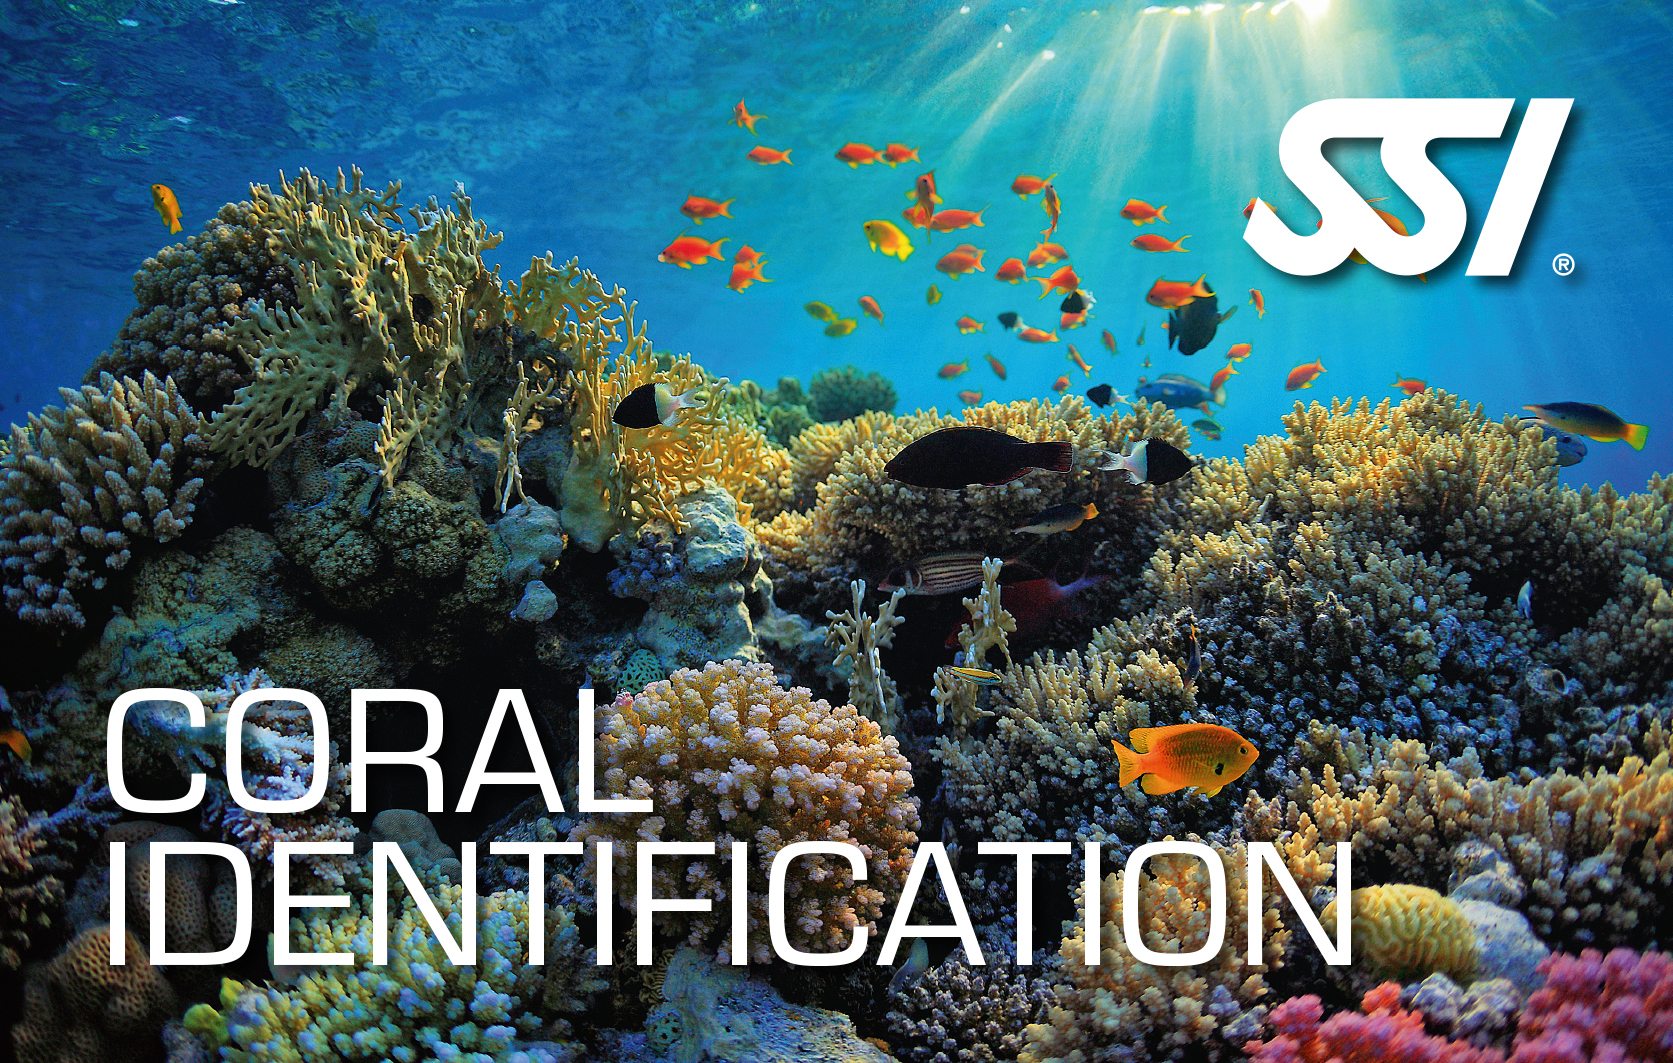 SSI Coral Identification | SSI Coral Identification Course | Coral Identification | Specialty Course | Diving Course | Eko Divers